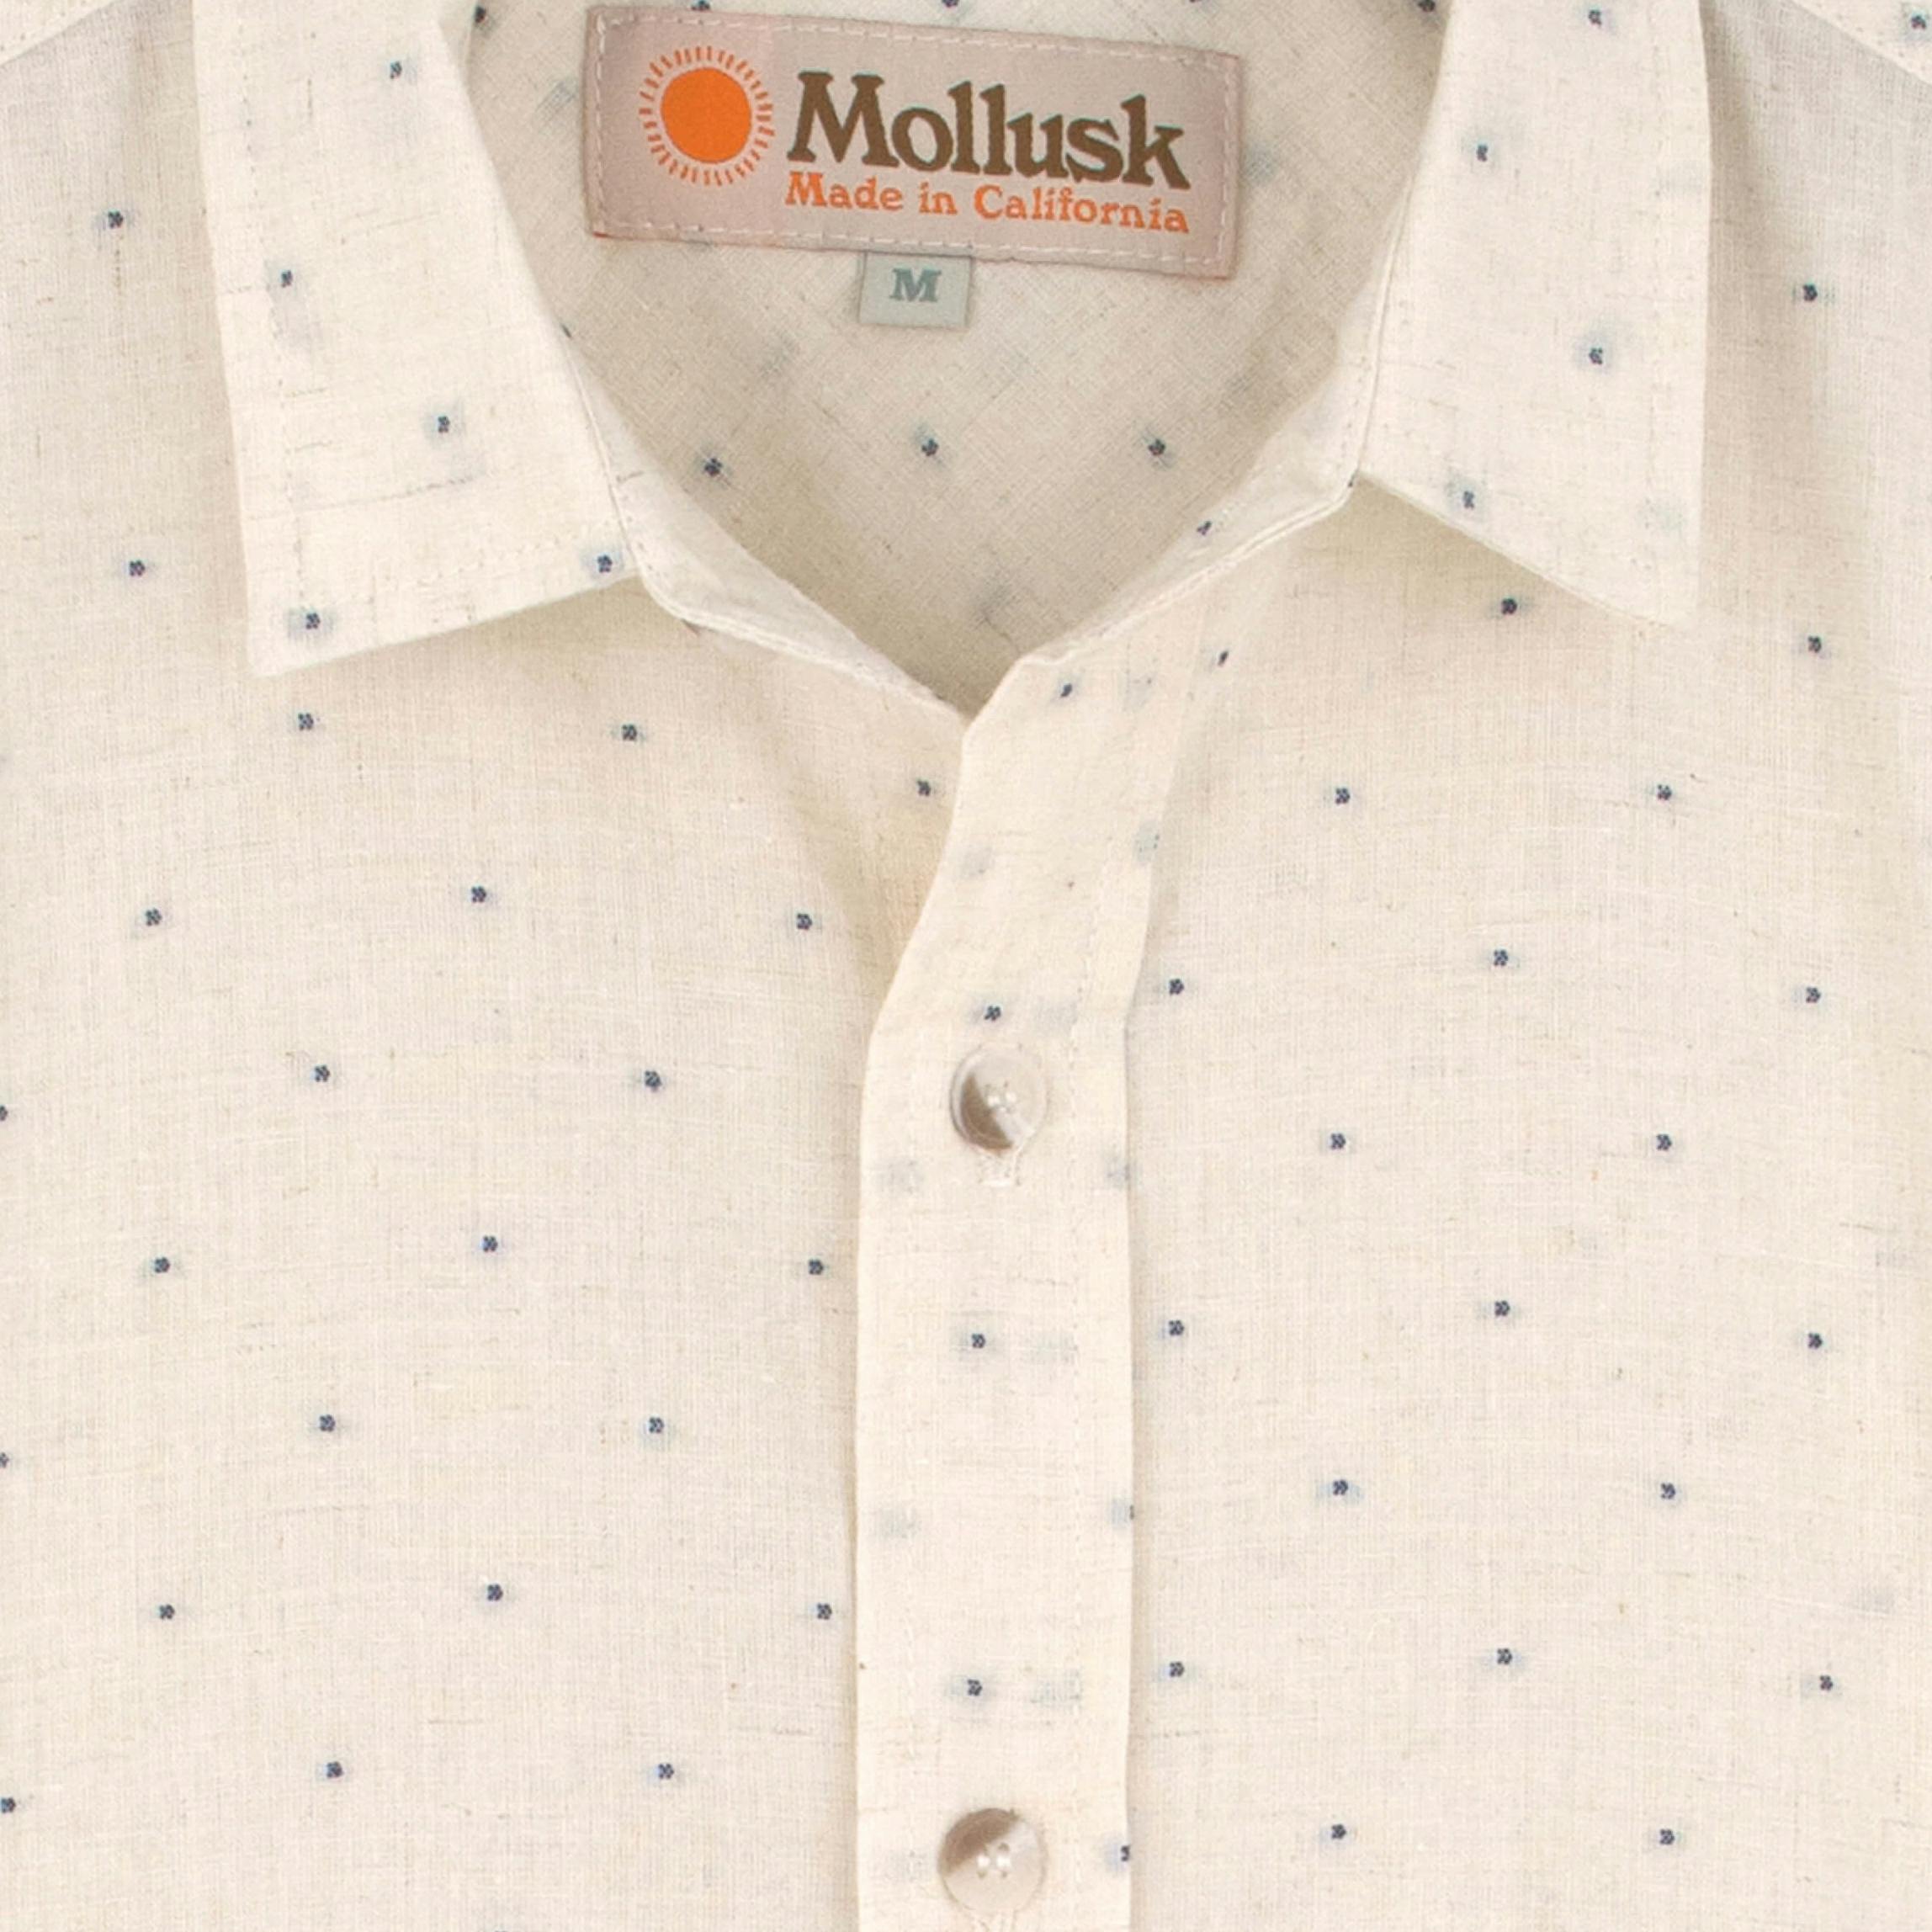 Mollusk Summer Shirt